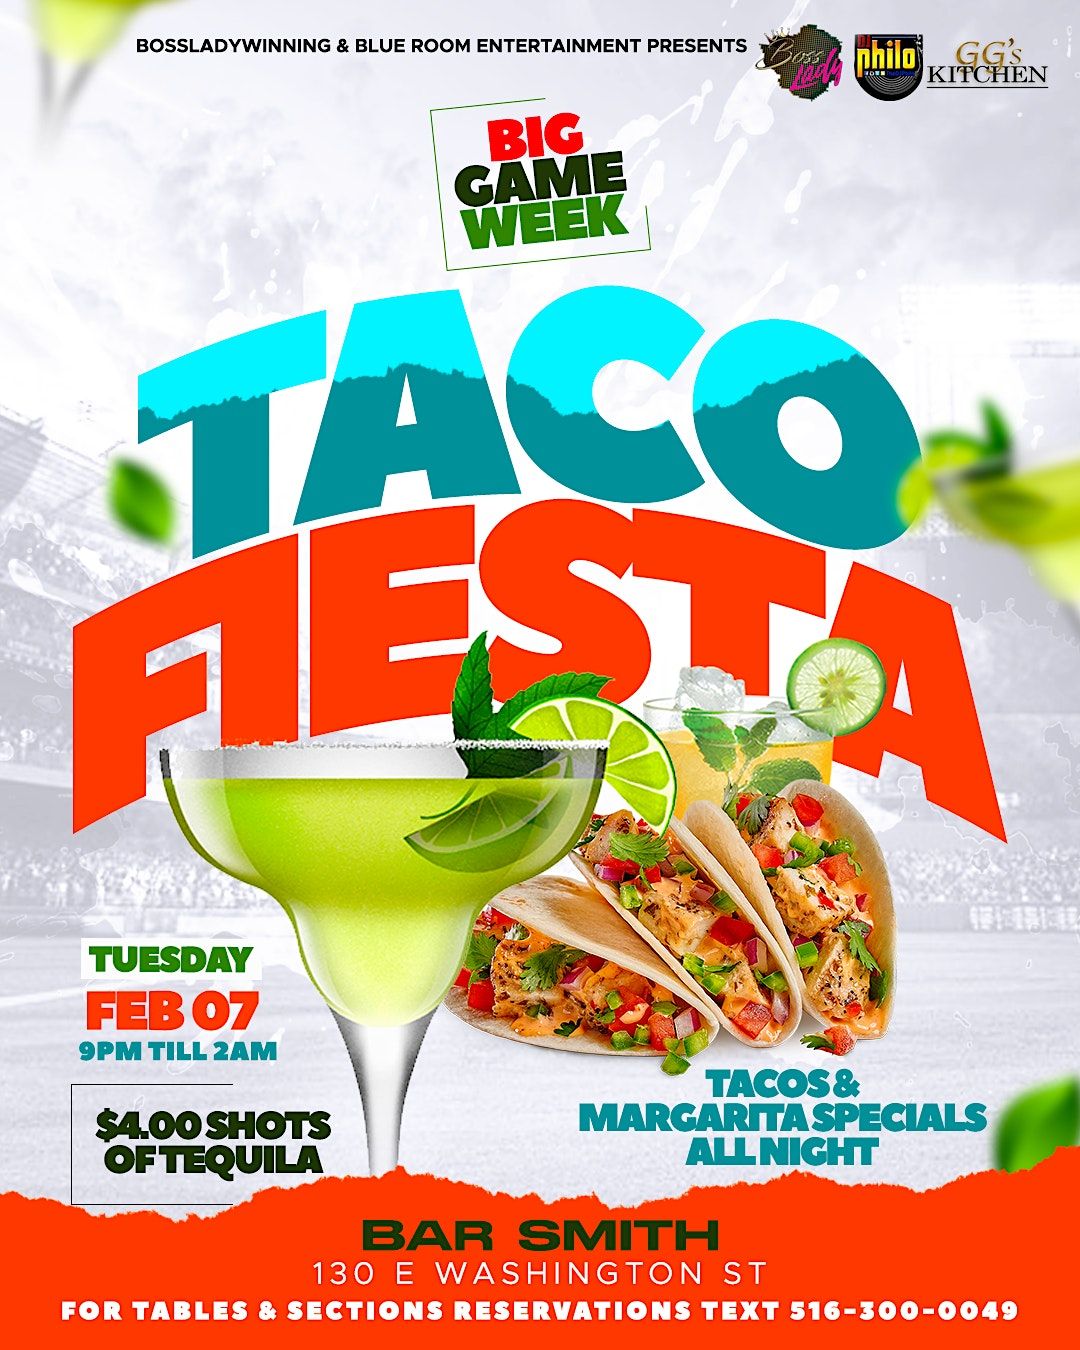 BIG GAME WEEK  Taco Tuesday Fiesta